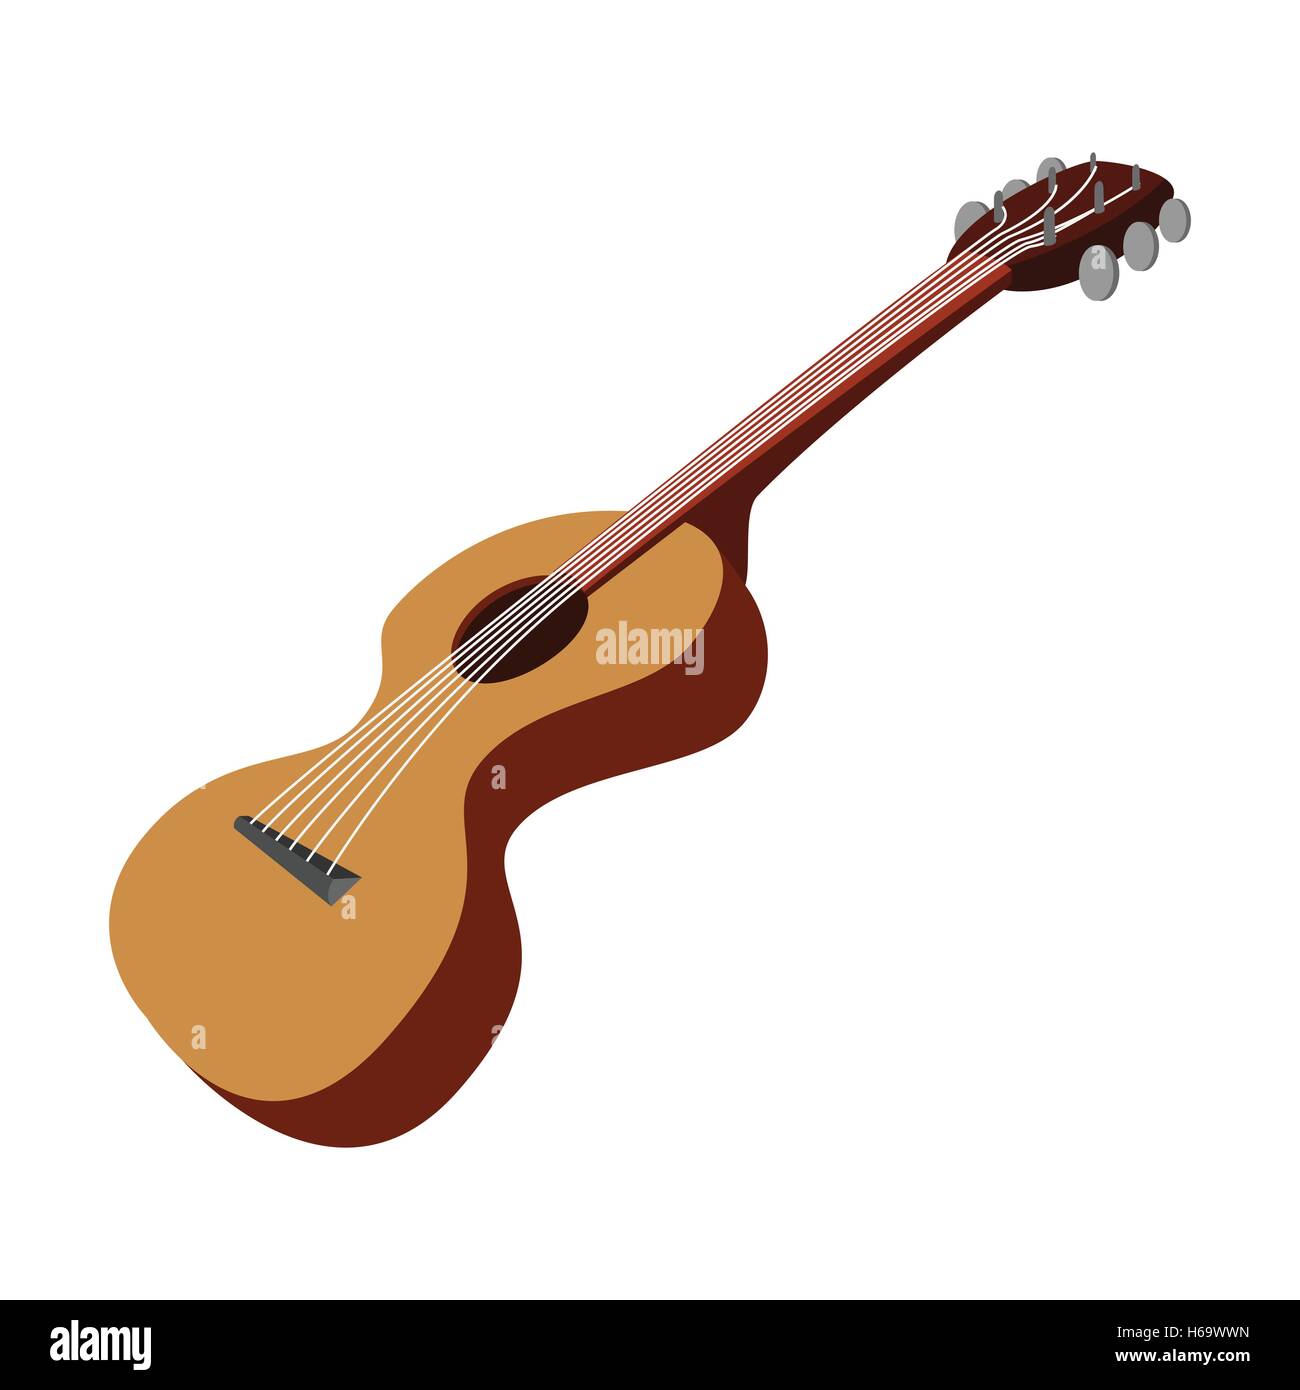 Gitarre Cartoon Ikone Stock-Vektorgrafik - Alamy